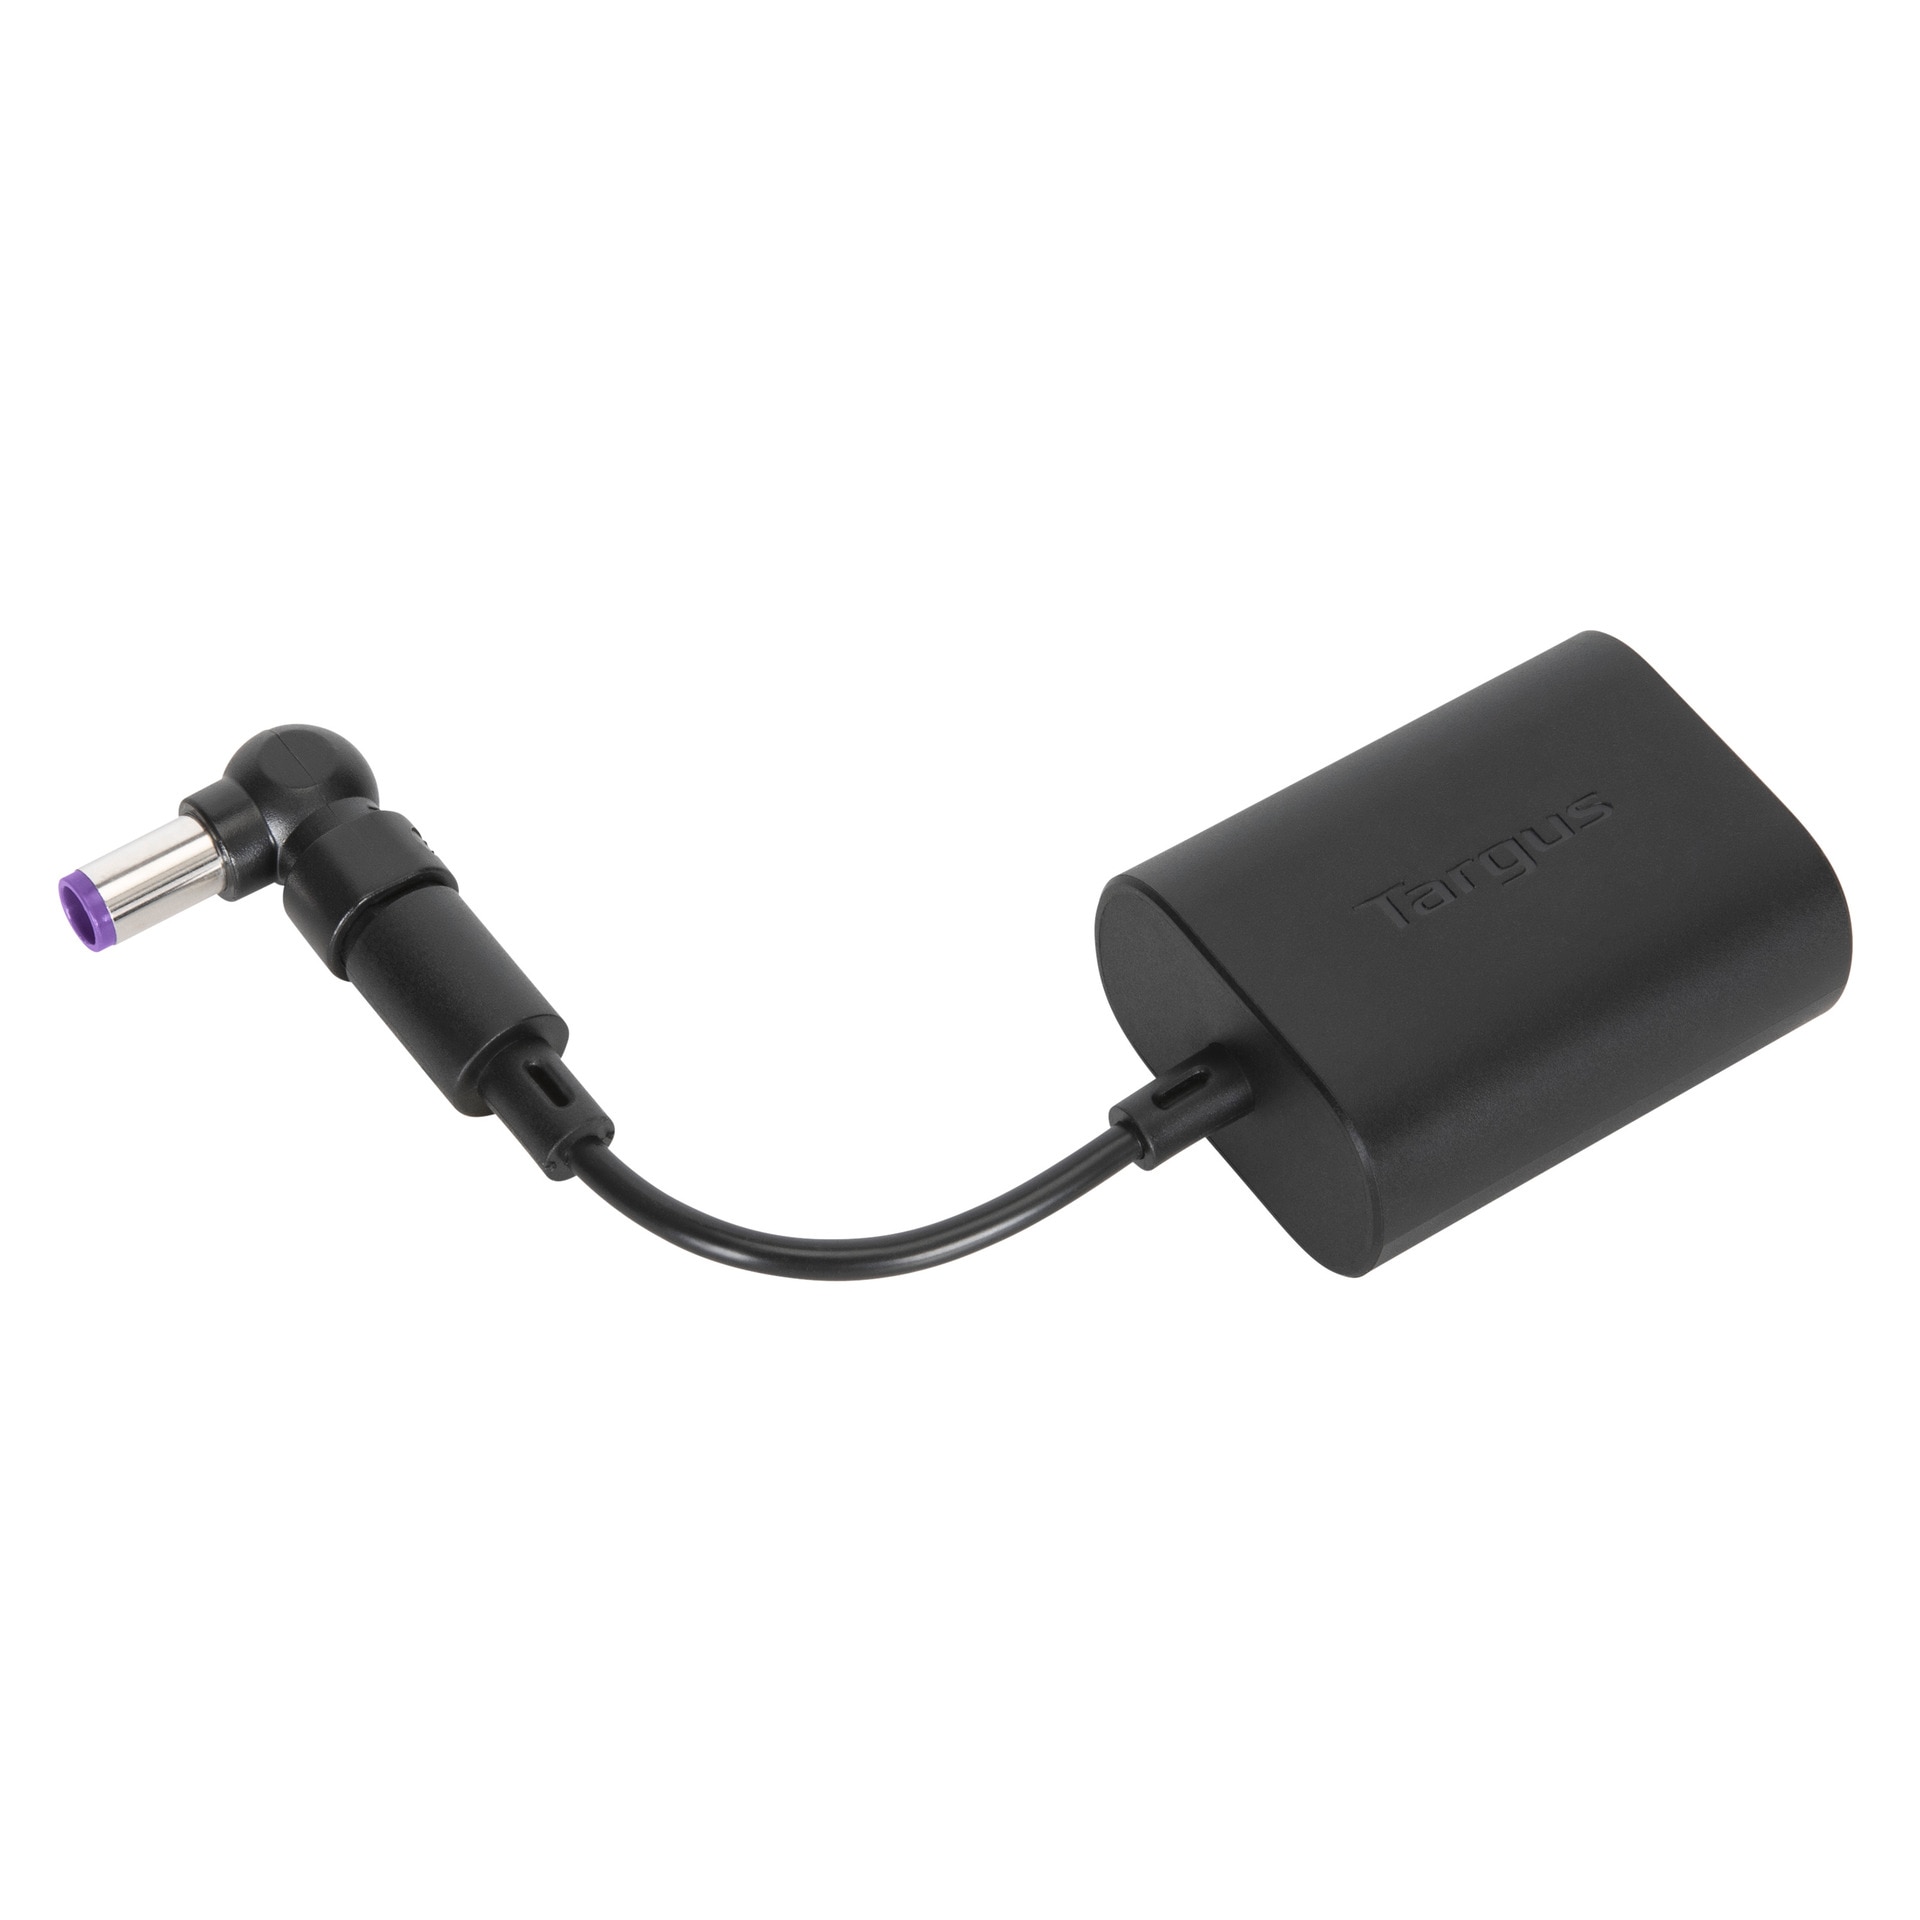 Targus Notebook-Ladegerät »USB-C Legacy Power Adapter Set«